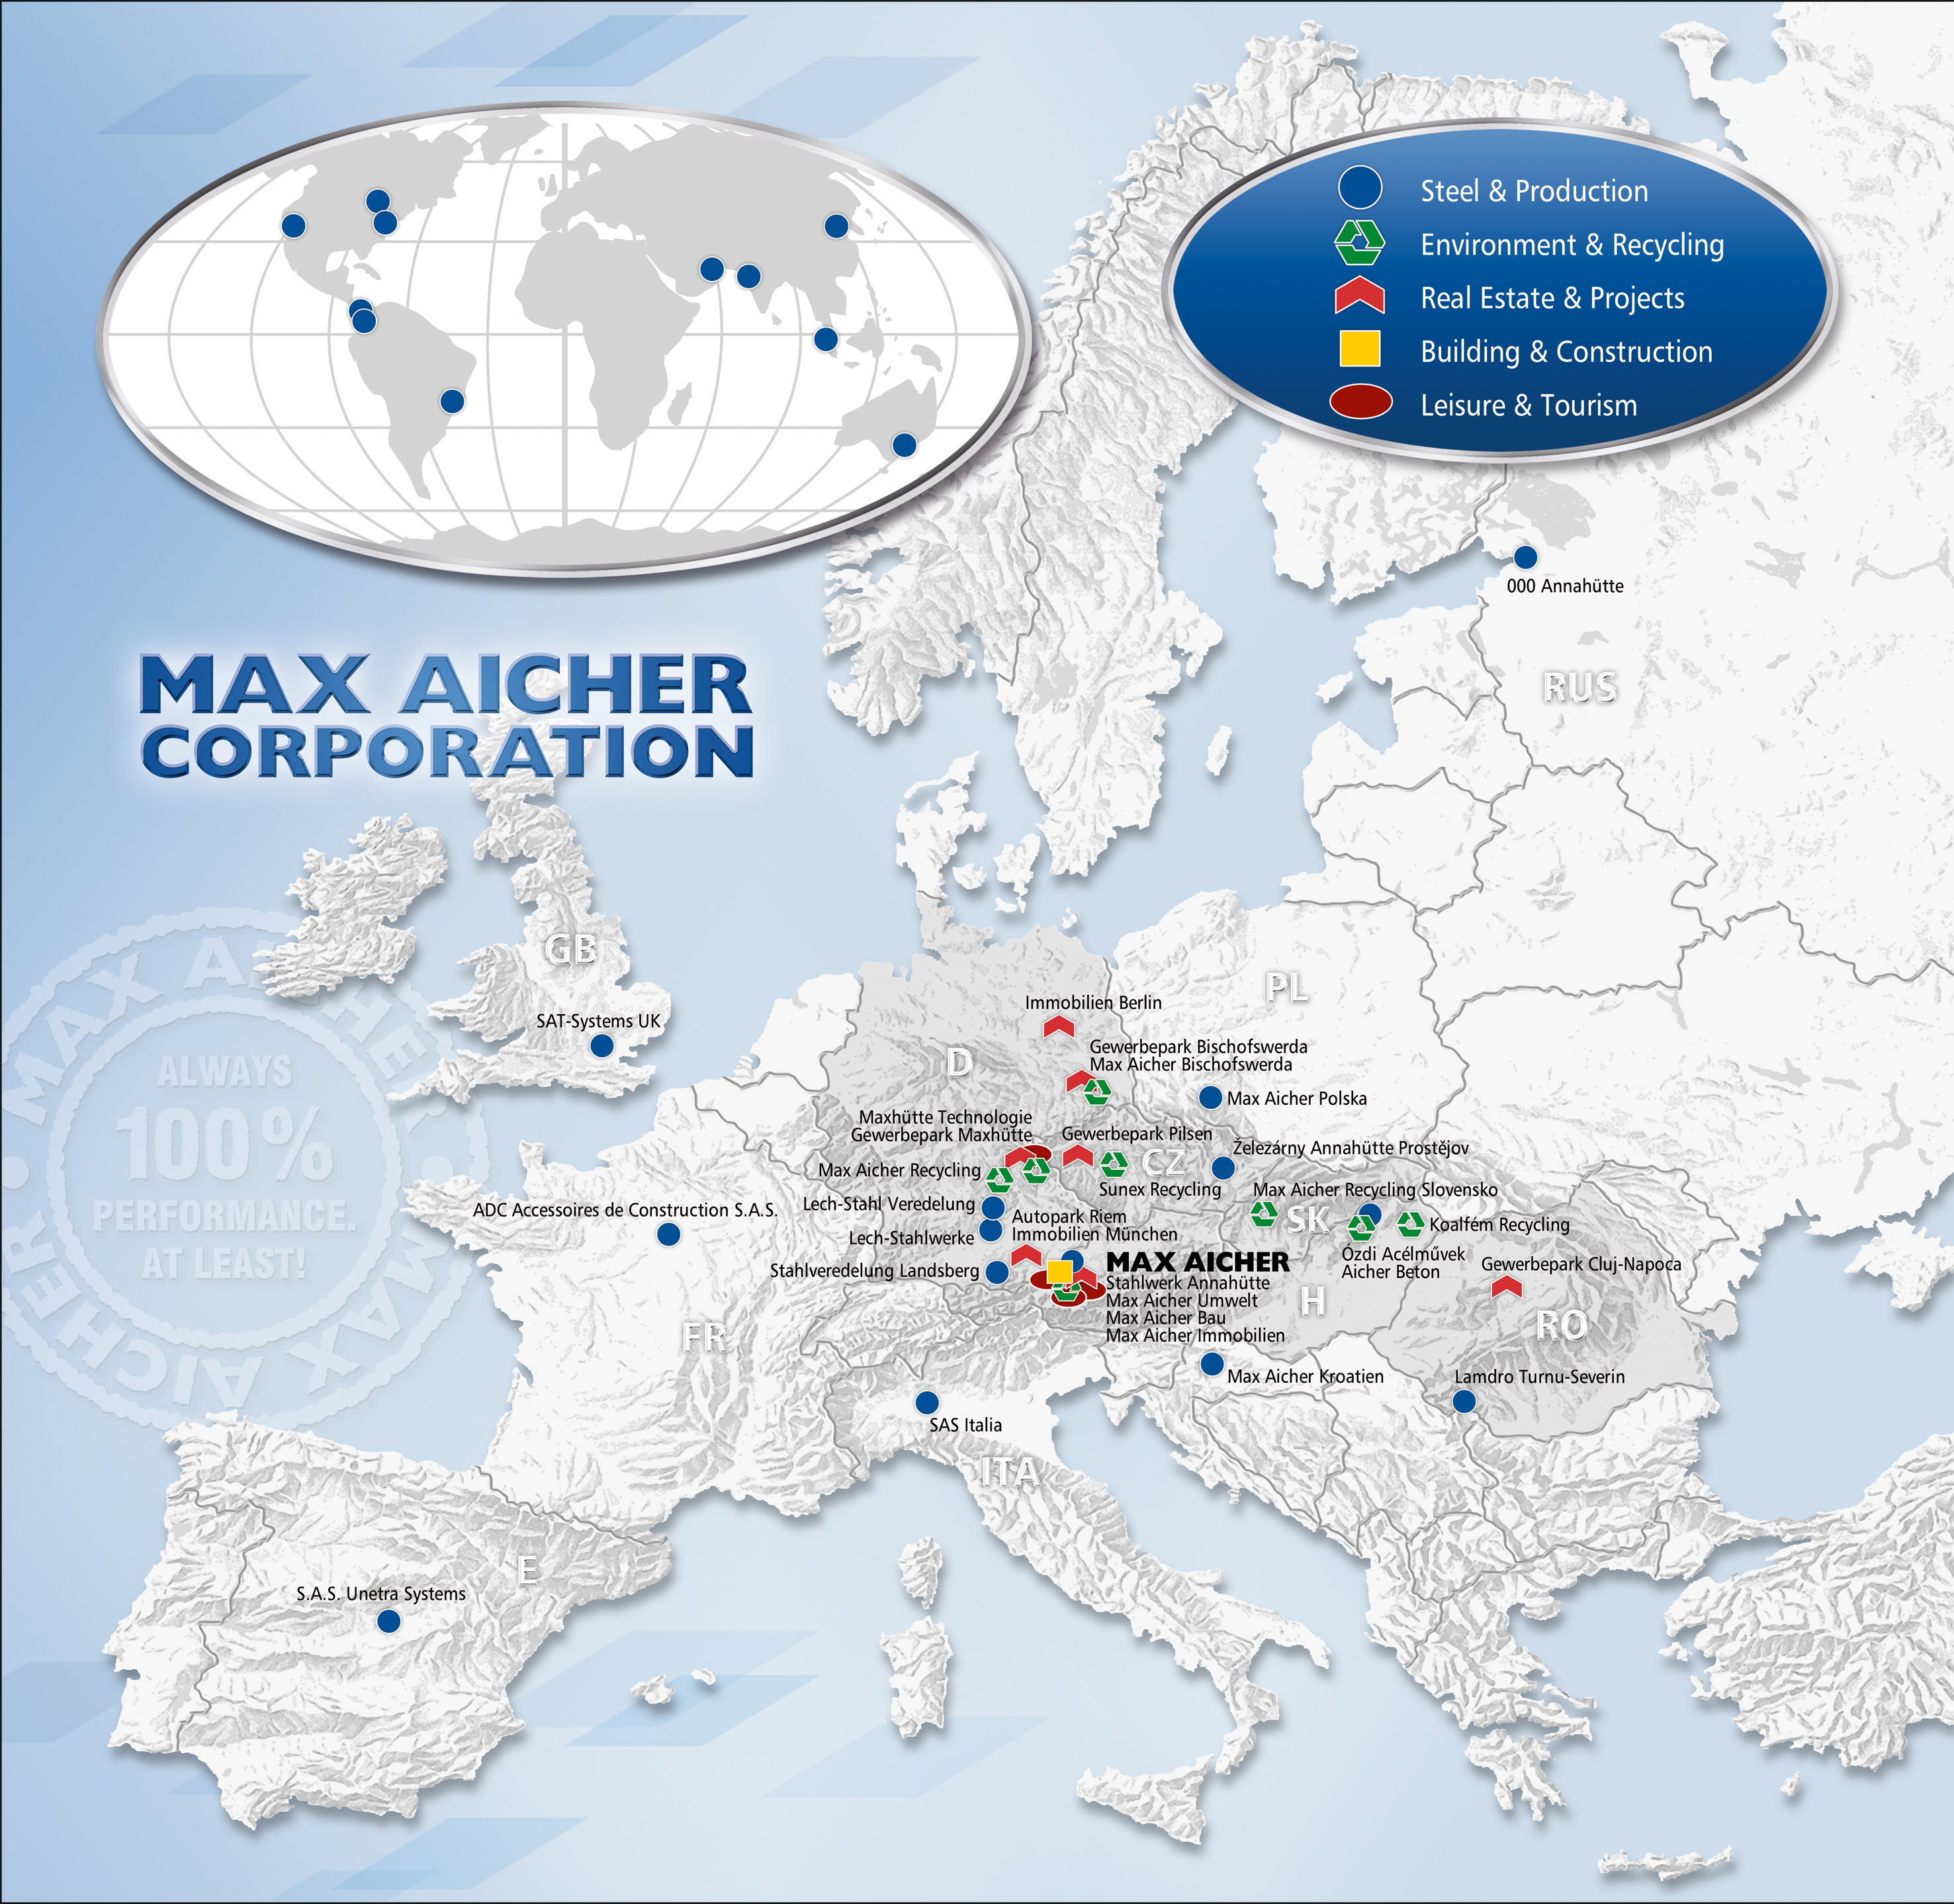 Max Aicher group of companies